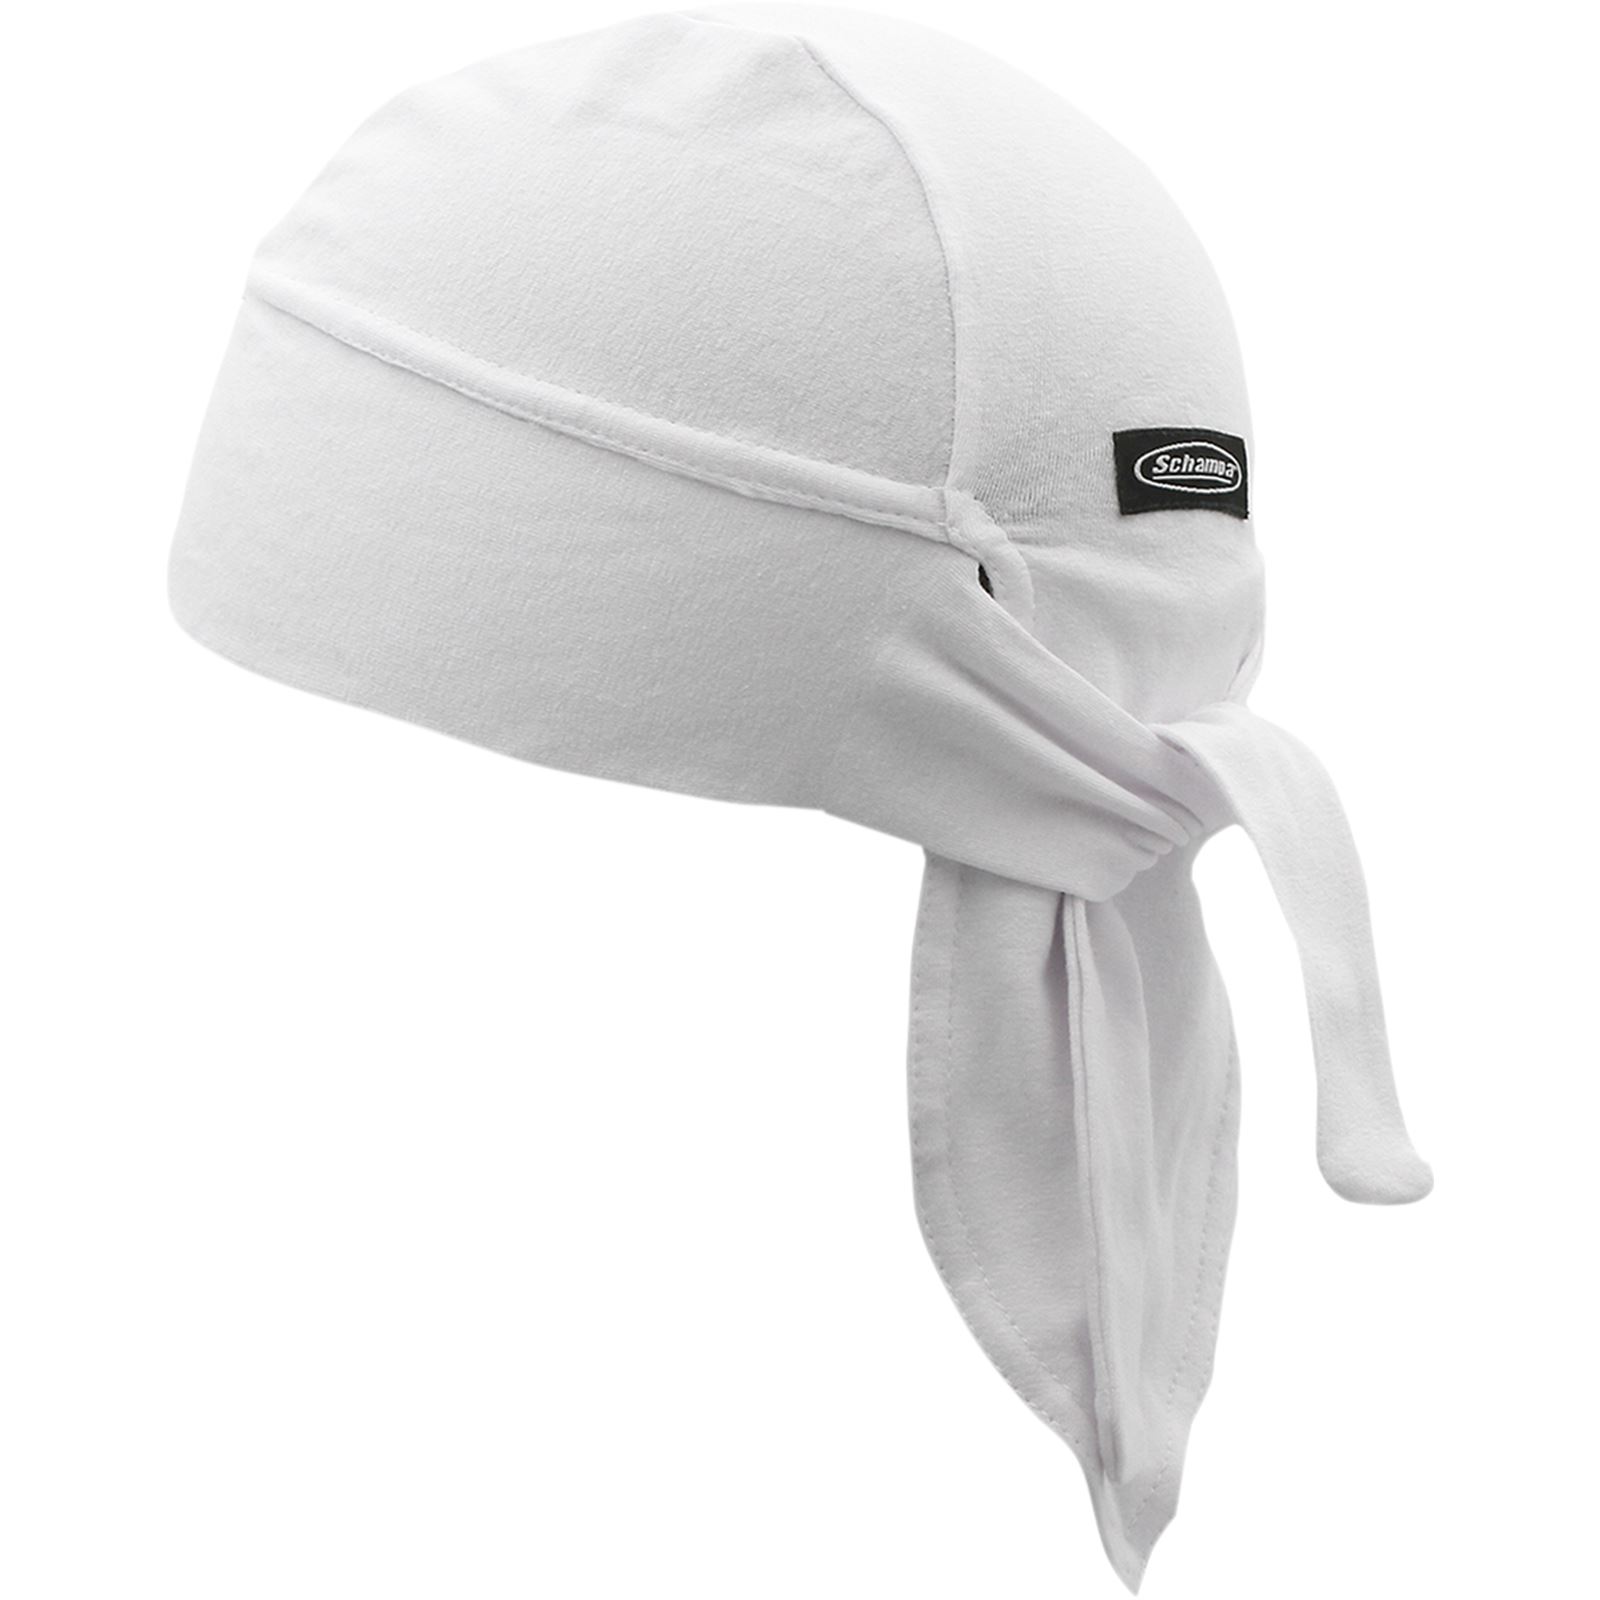 Schampa Technical Wear Wide Band Headwrap - White